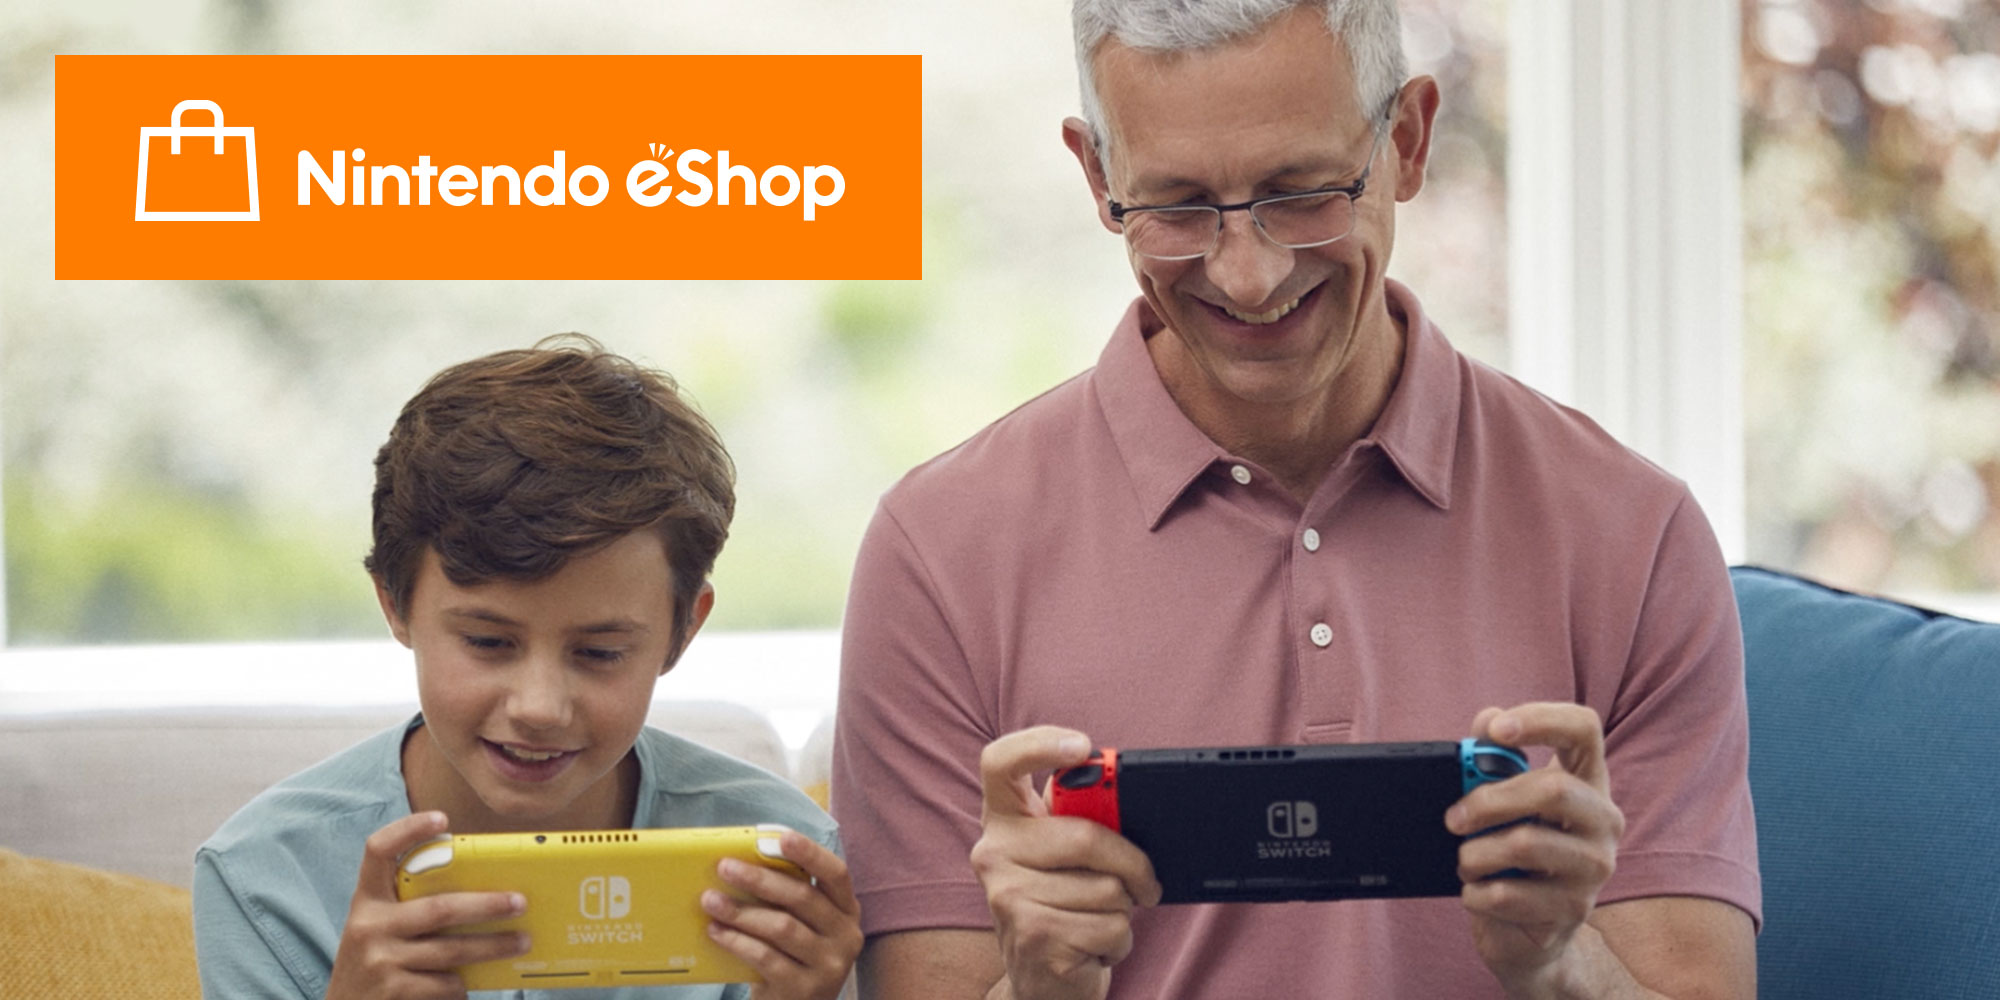 Go digital with Nintendo eShop on Nintendo Switch!